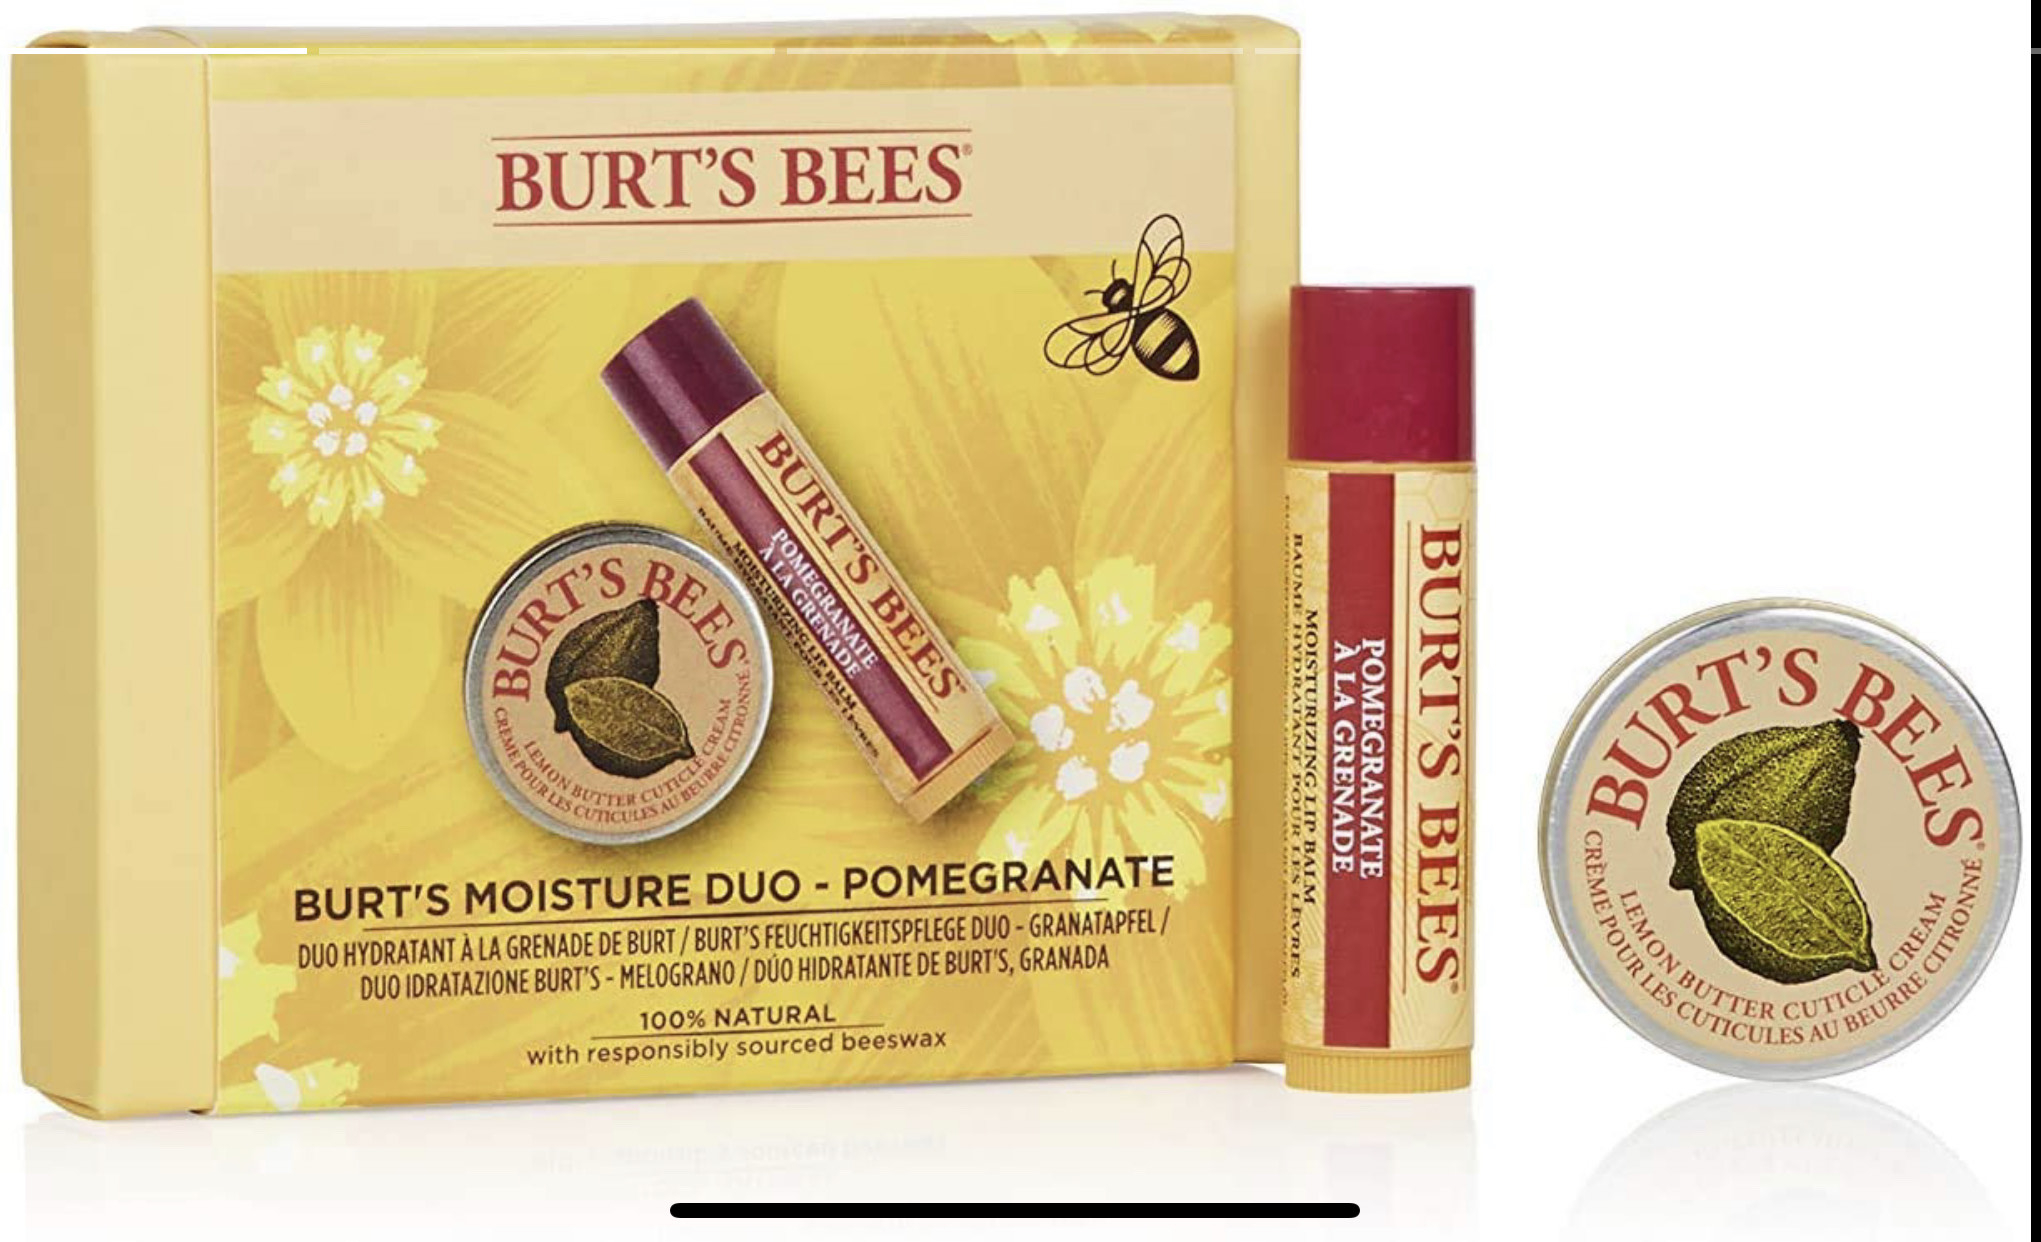 Burts bees moisture duo gift set £4.88 prime / £9.37